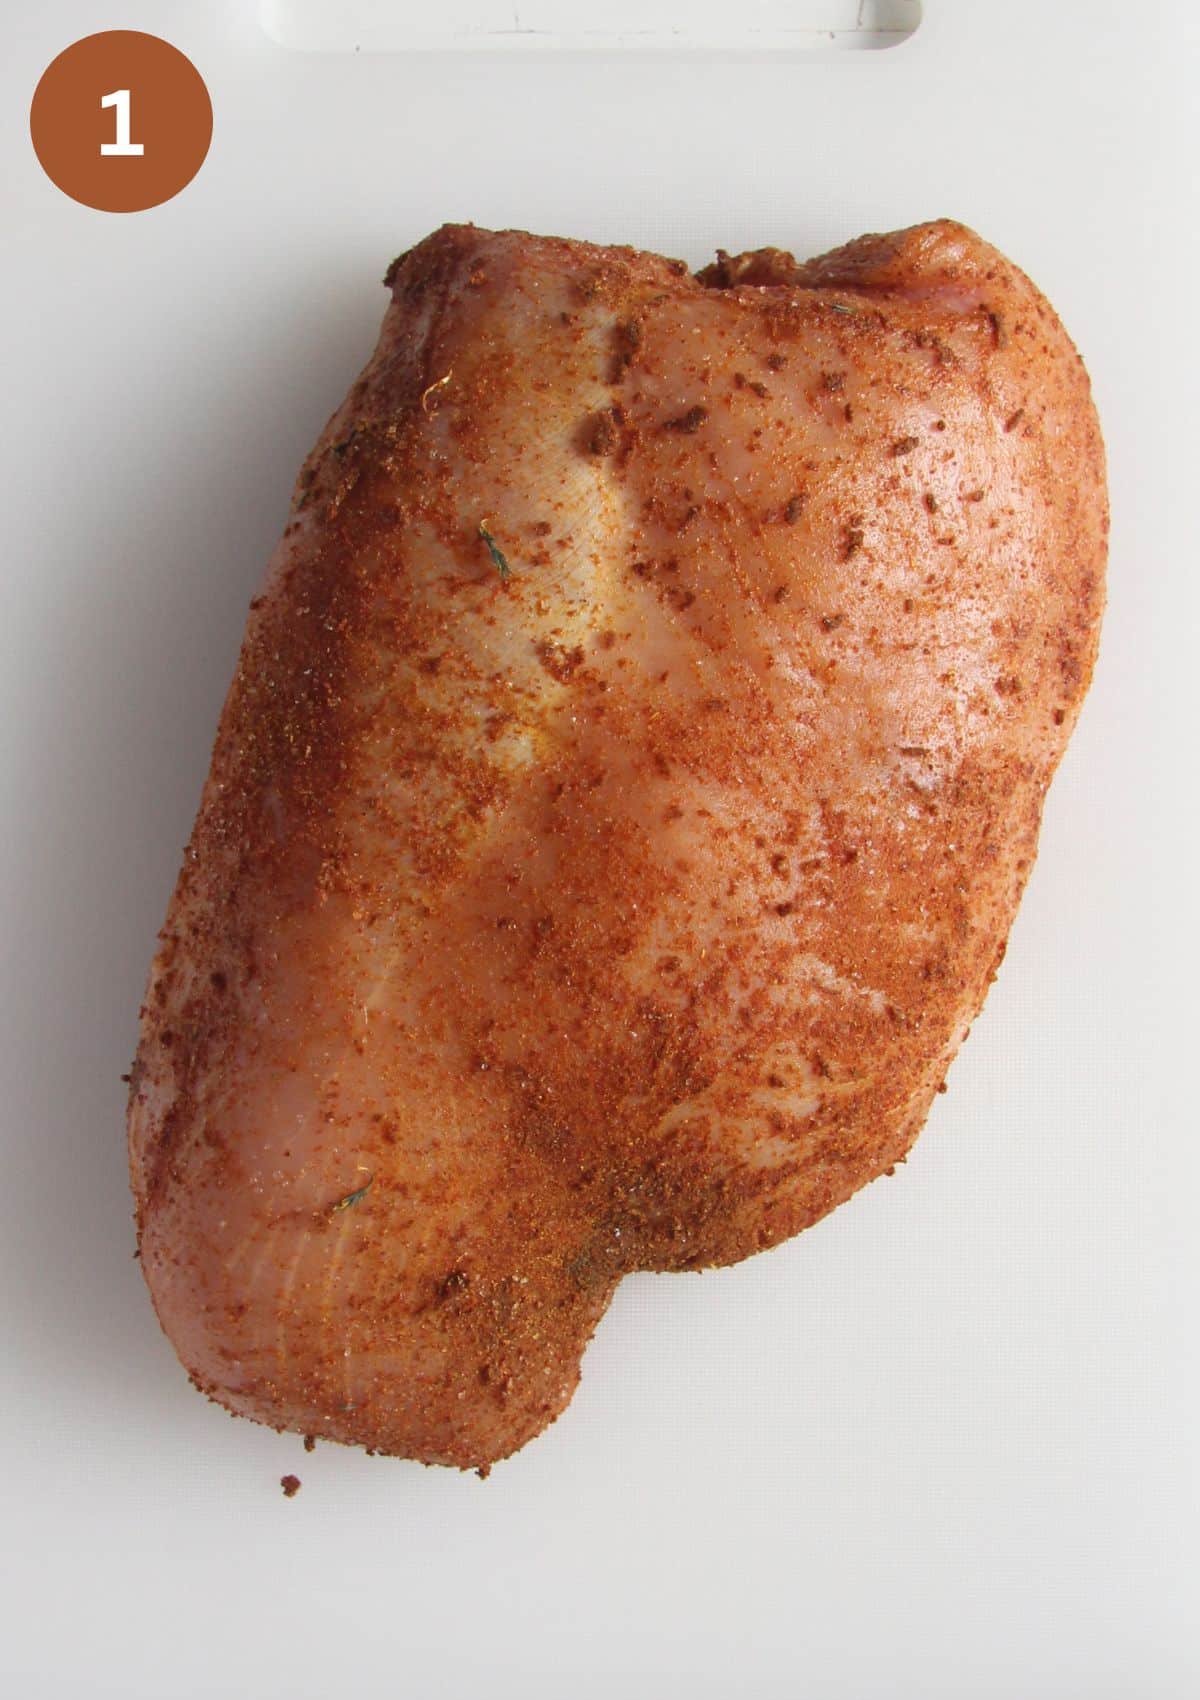 raw piece of seasoned turkey breast before roasting.